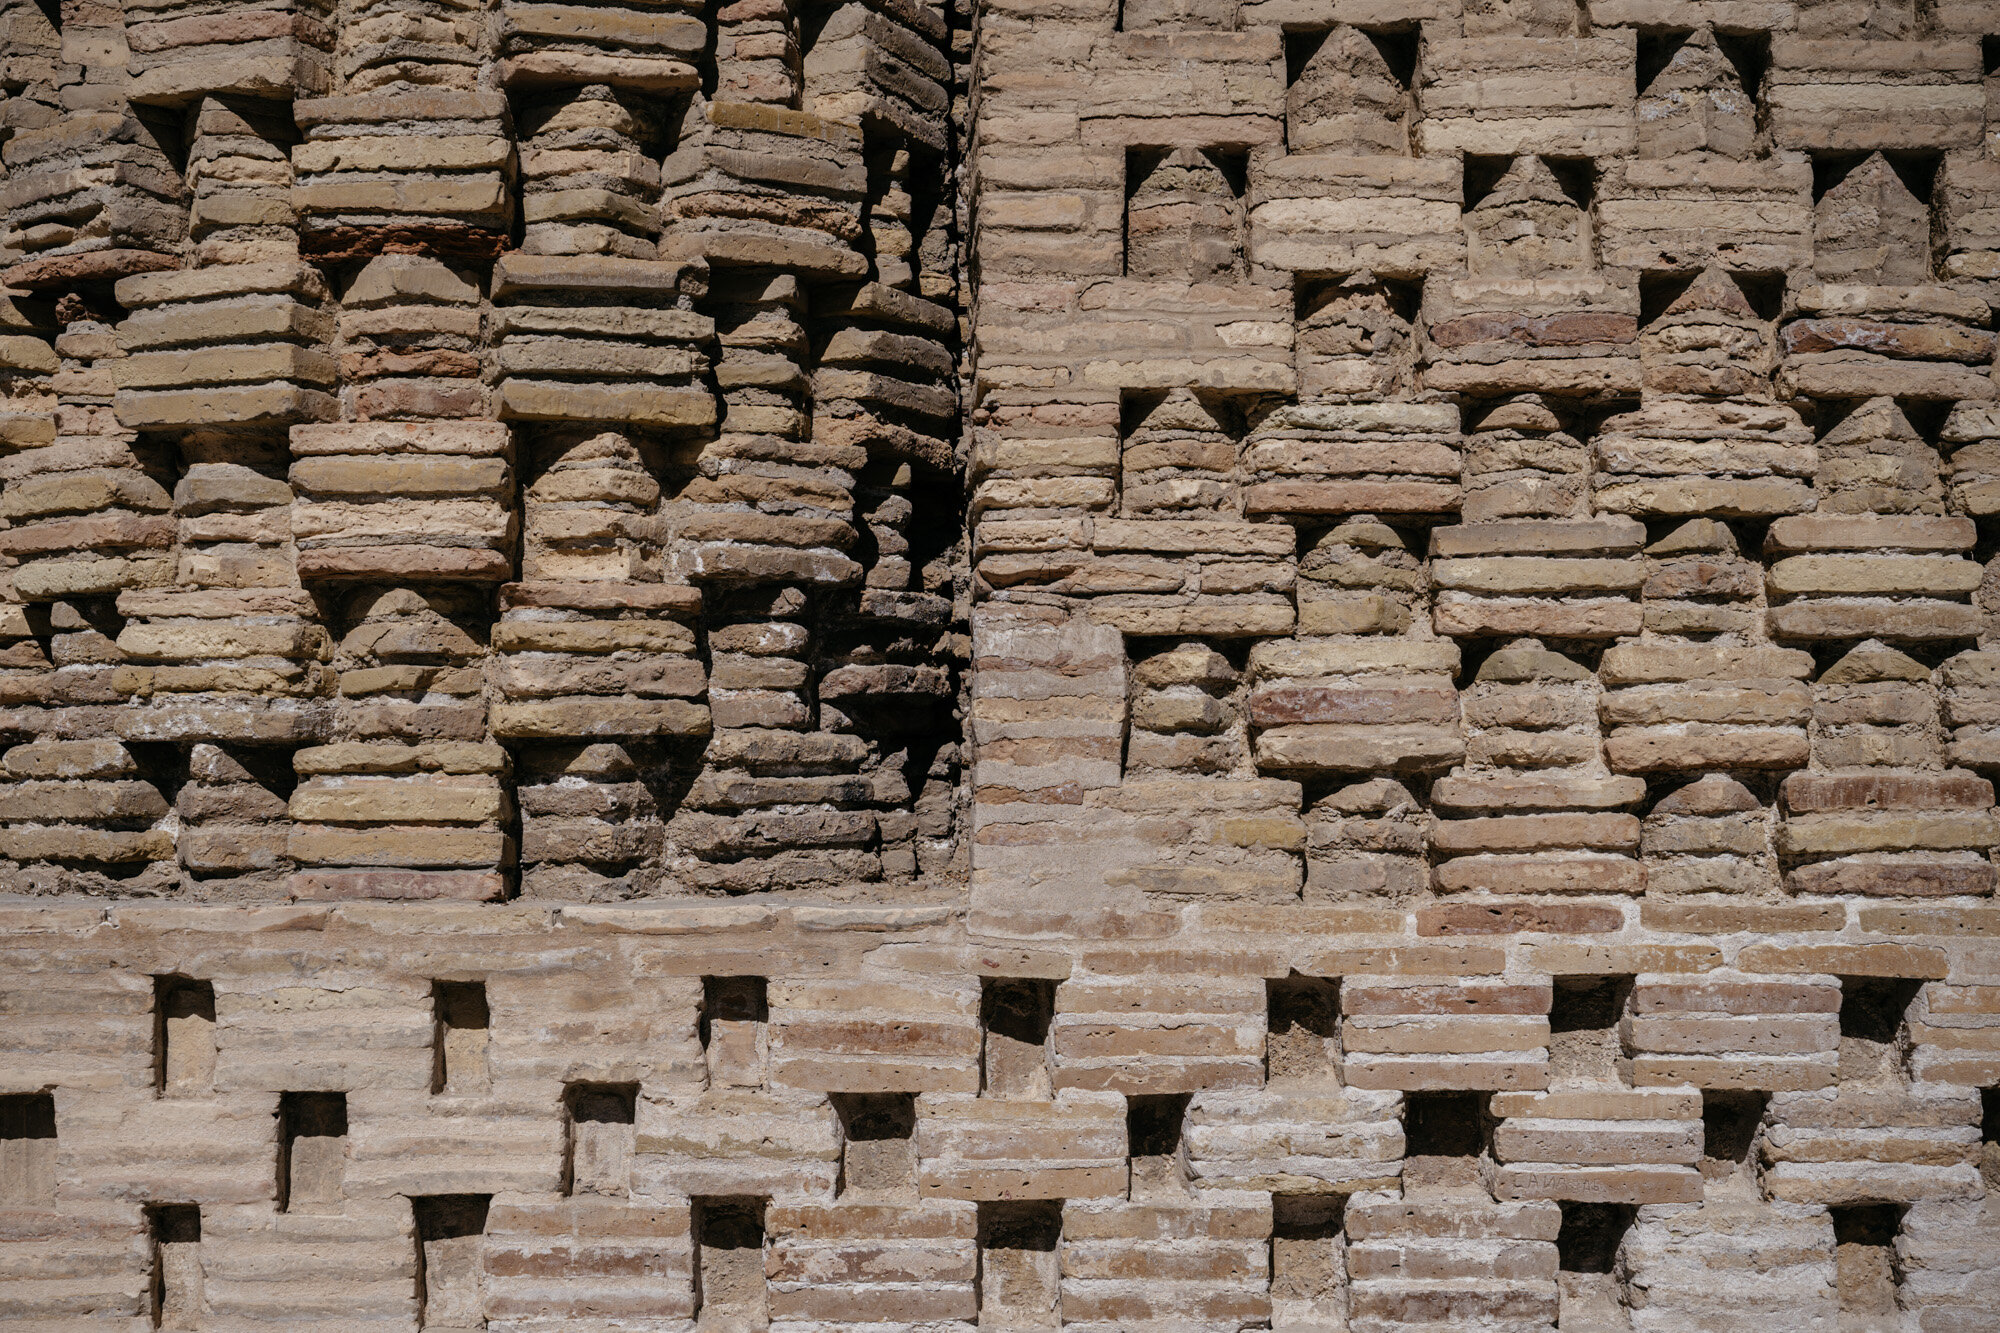  Some of the mausoleum’s iconic brickwork 